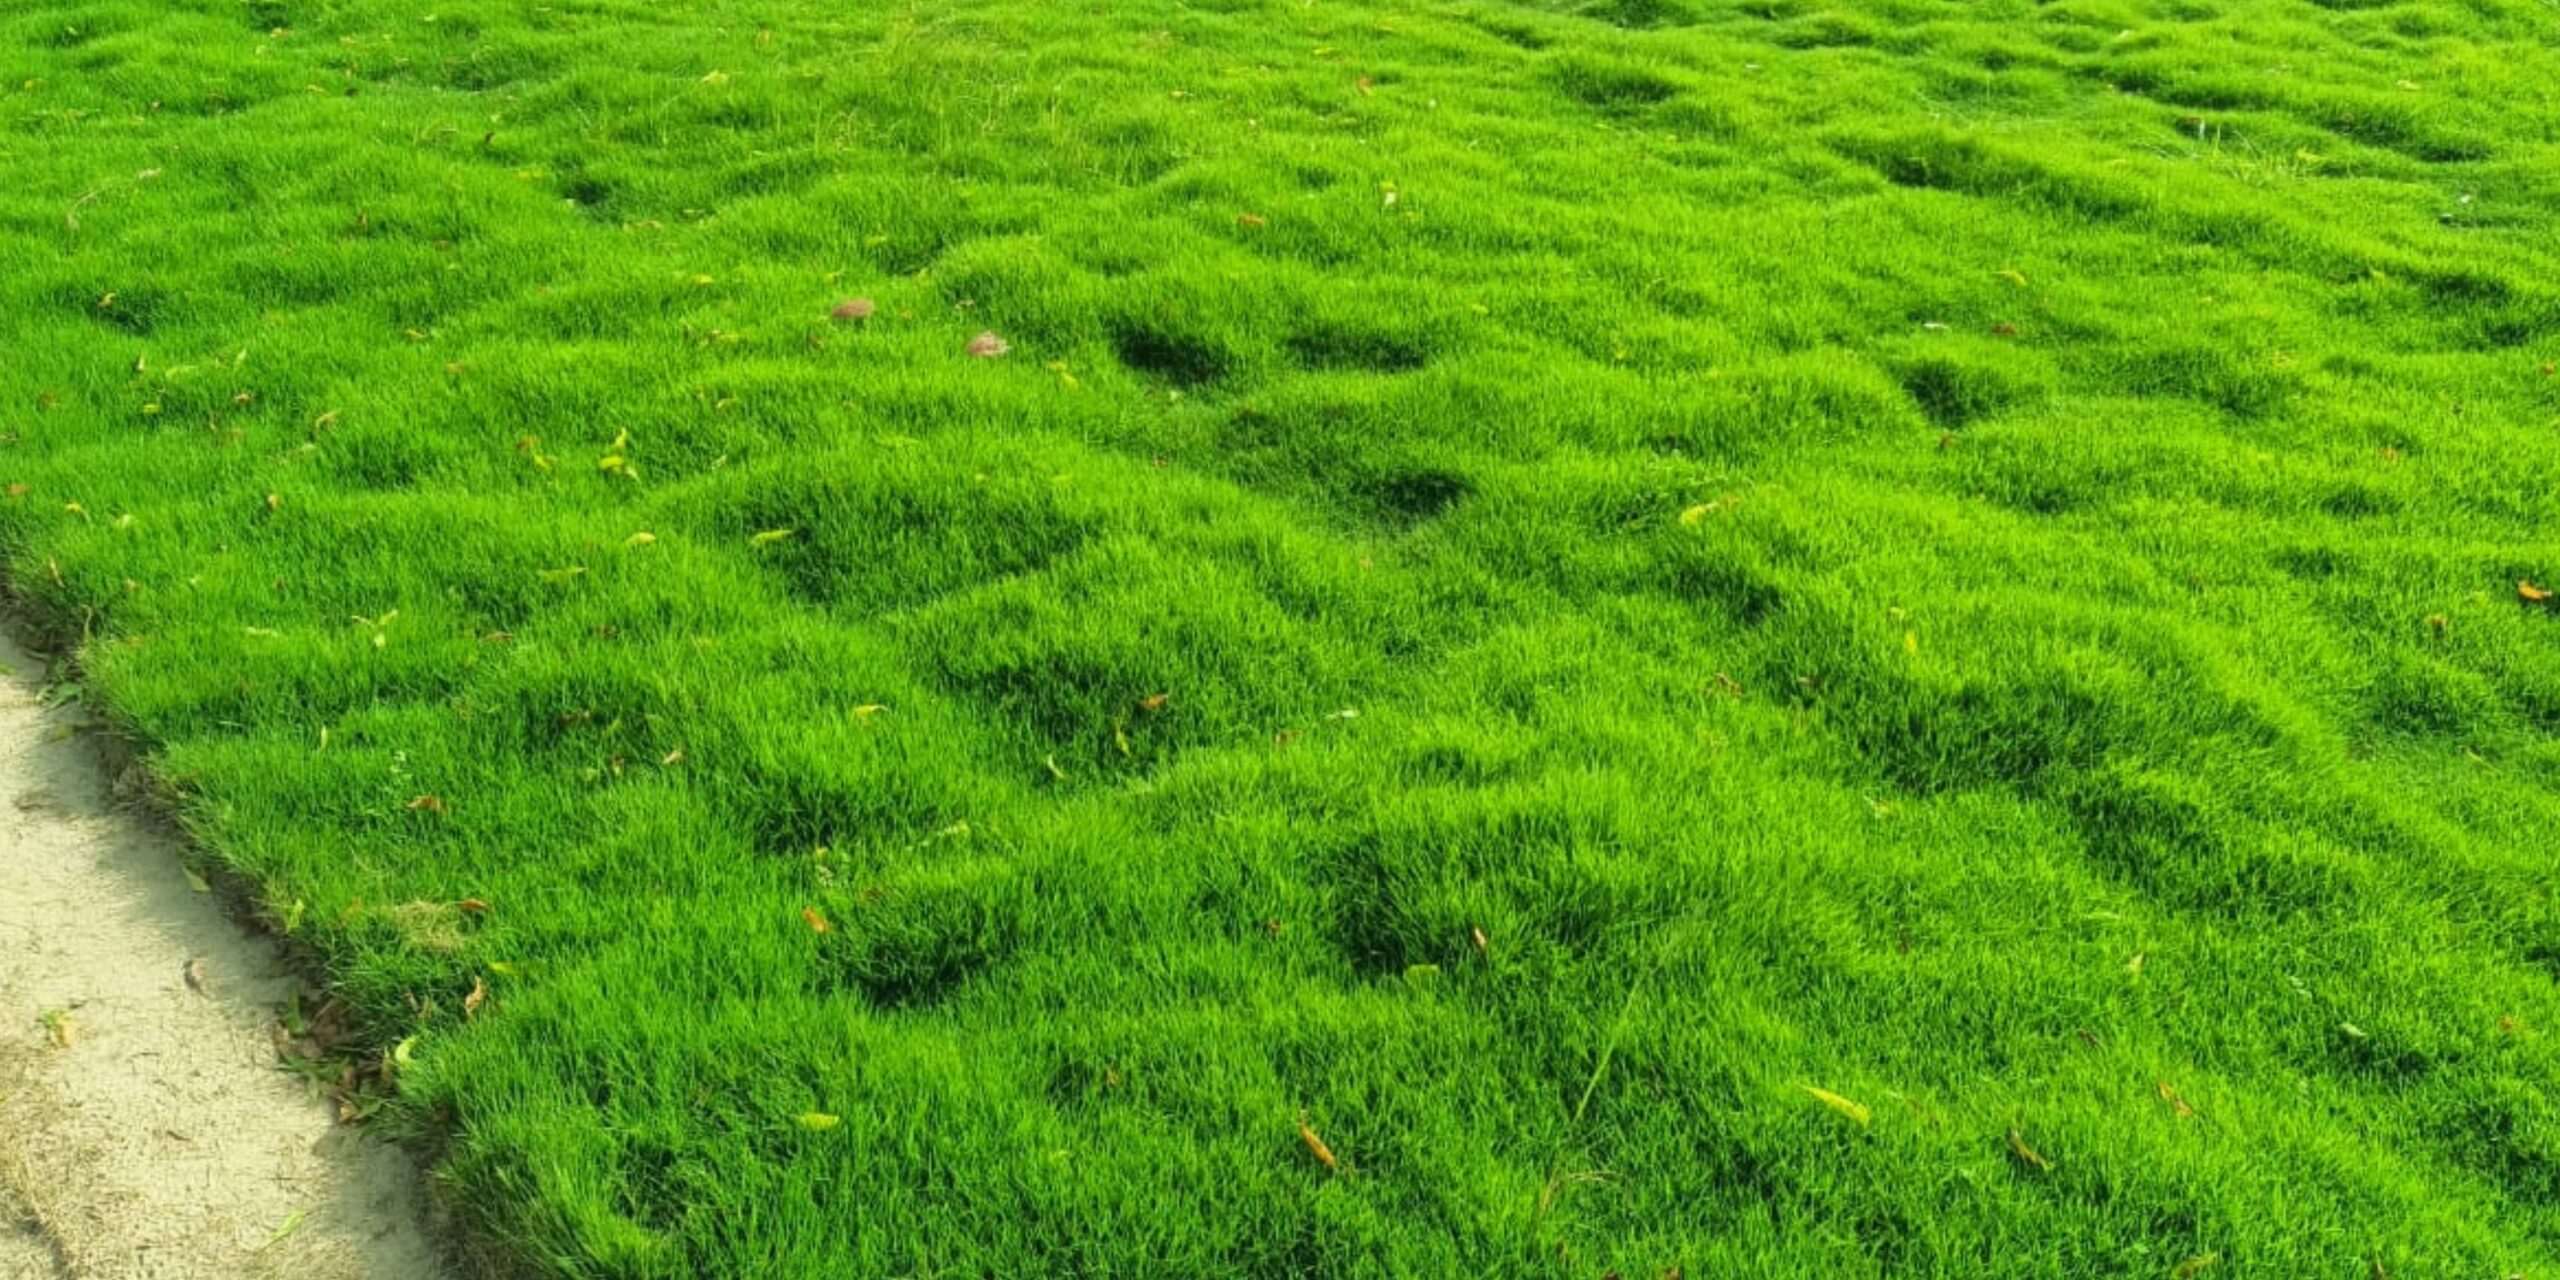 Natural Lawn Grass